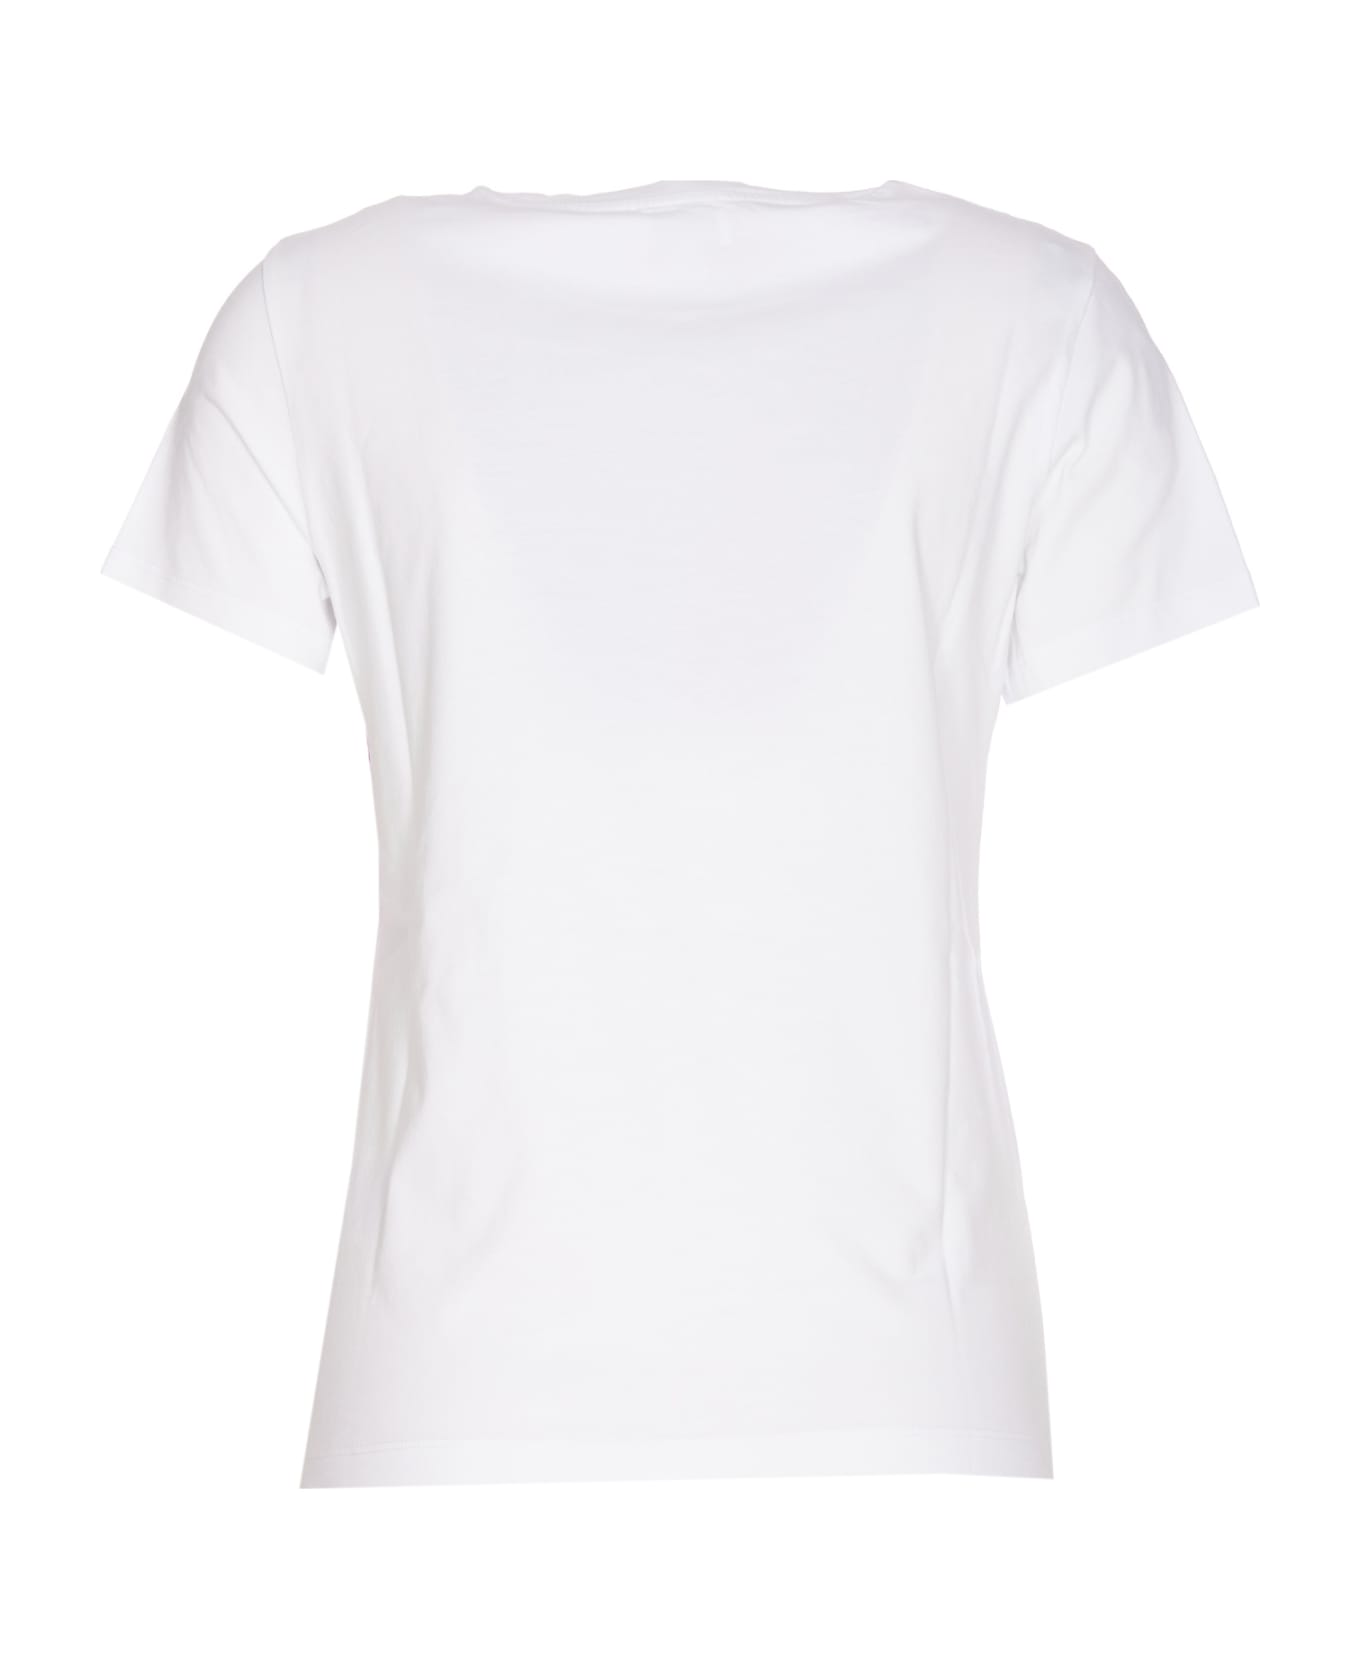 Kenzo Boke 2.0 Classic T-shirt - White Tシャツ